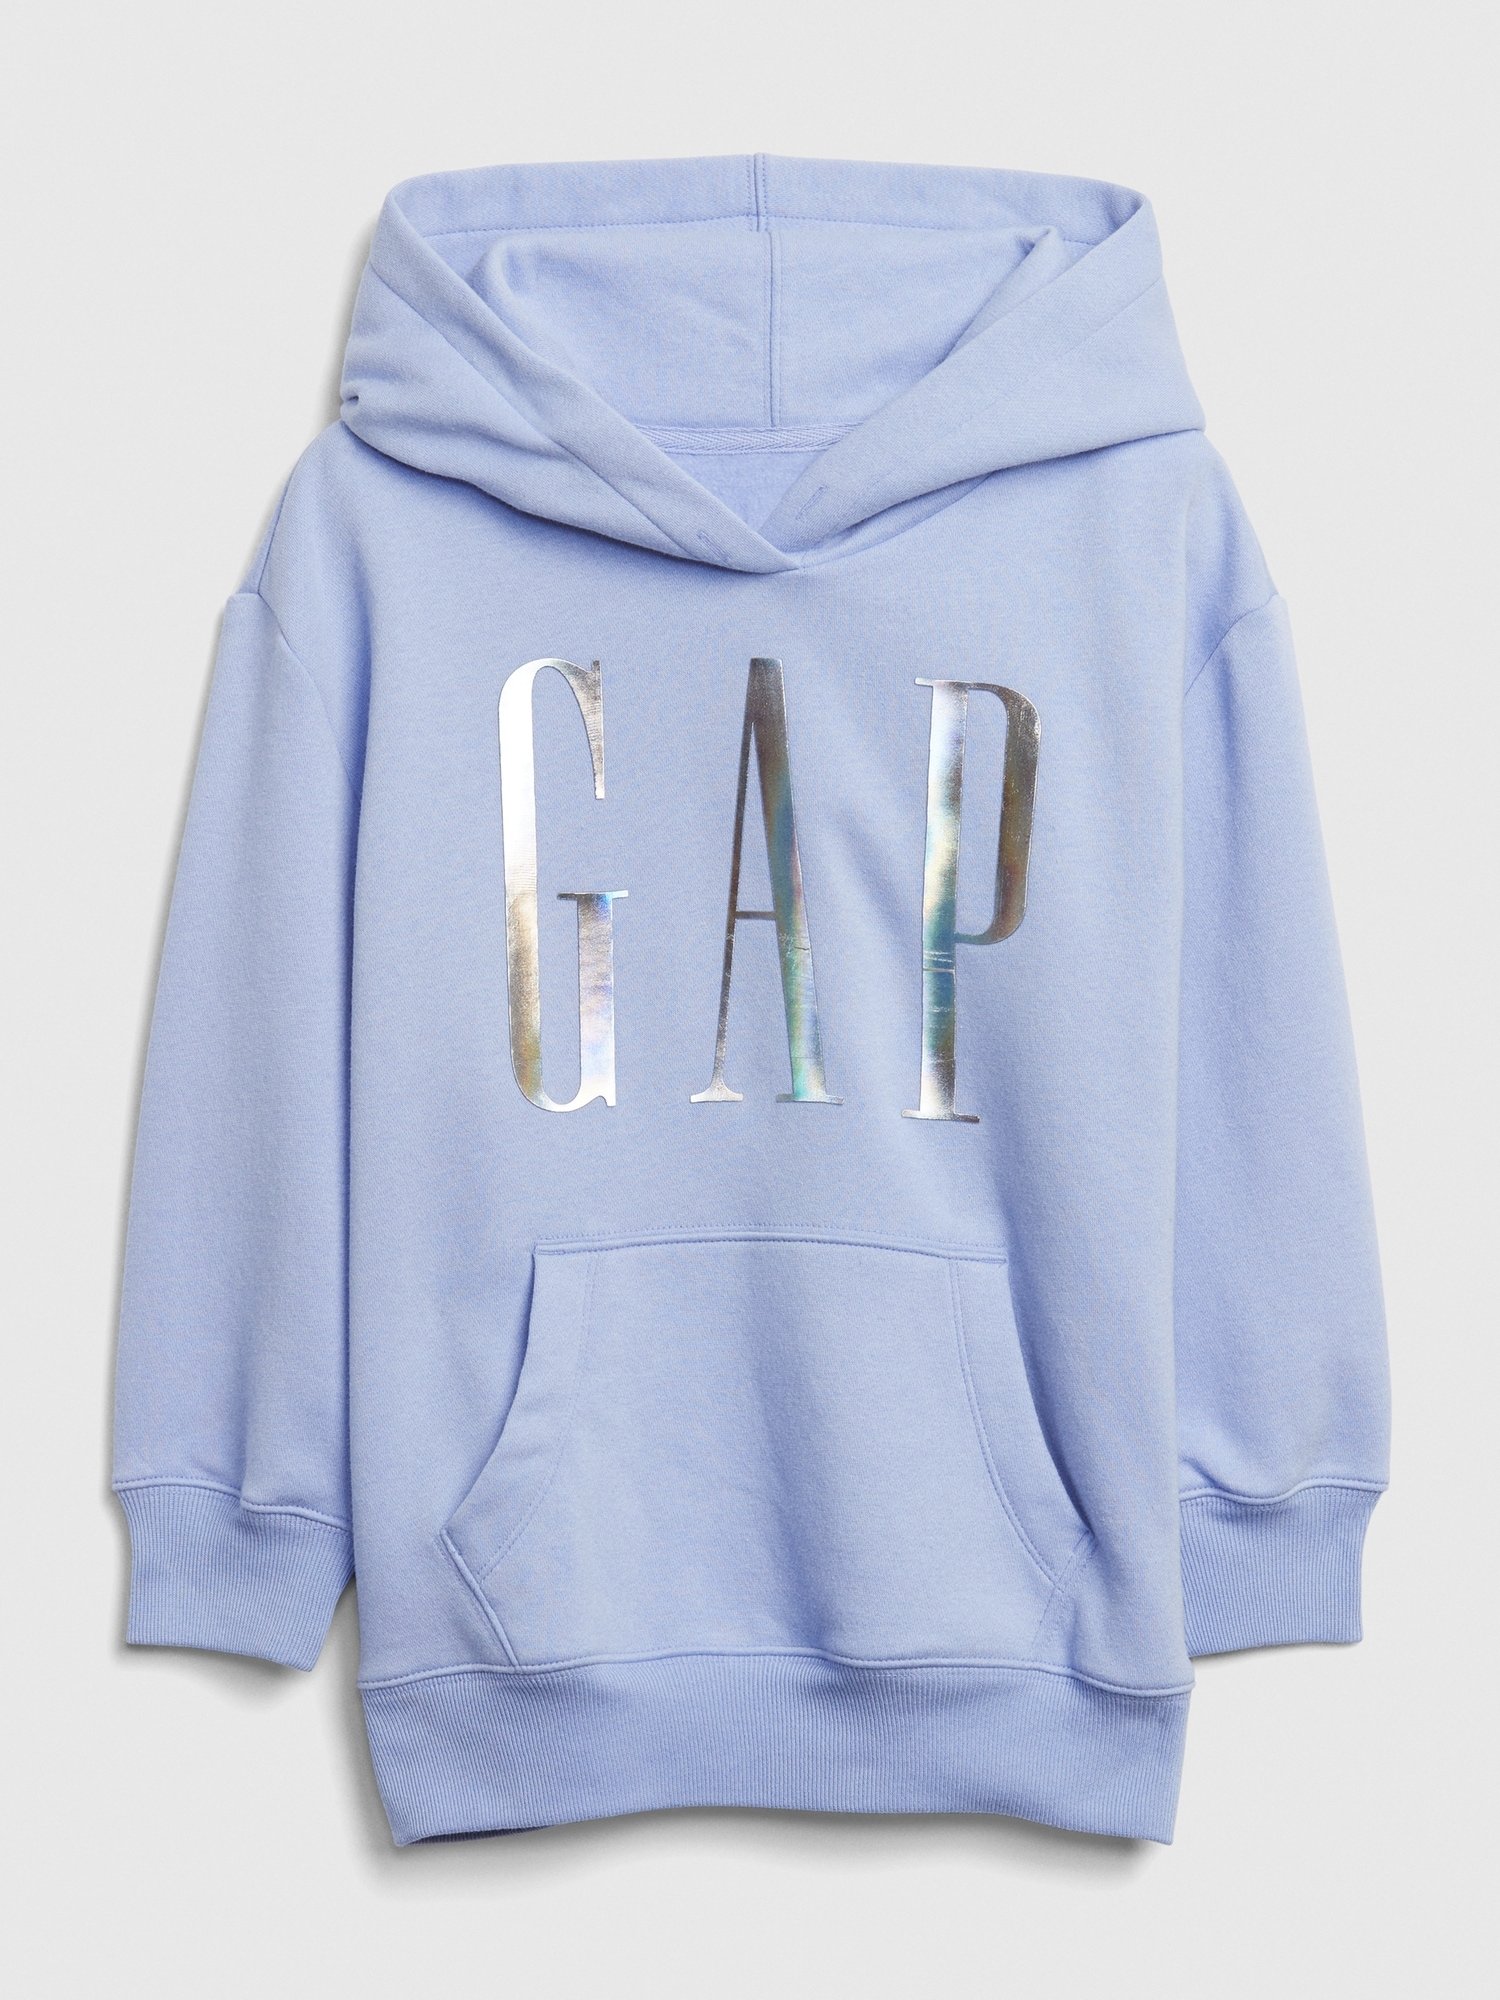 Gap Logo Kapüşonlu Tunik Sweatshirt product image